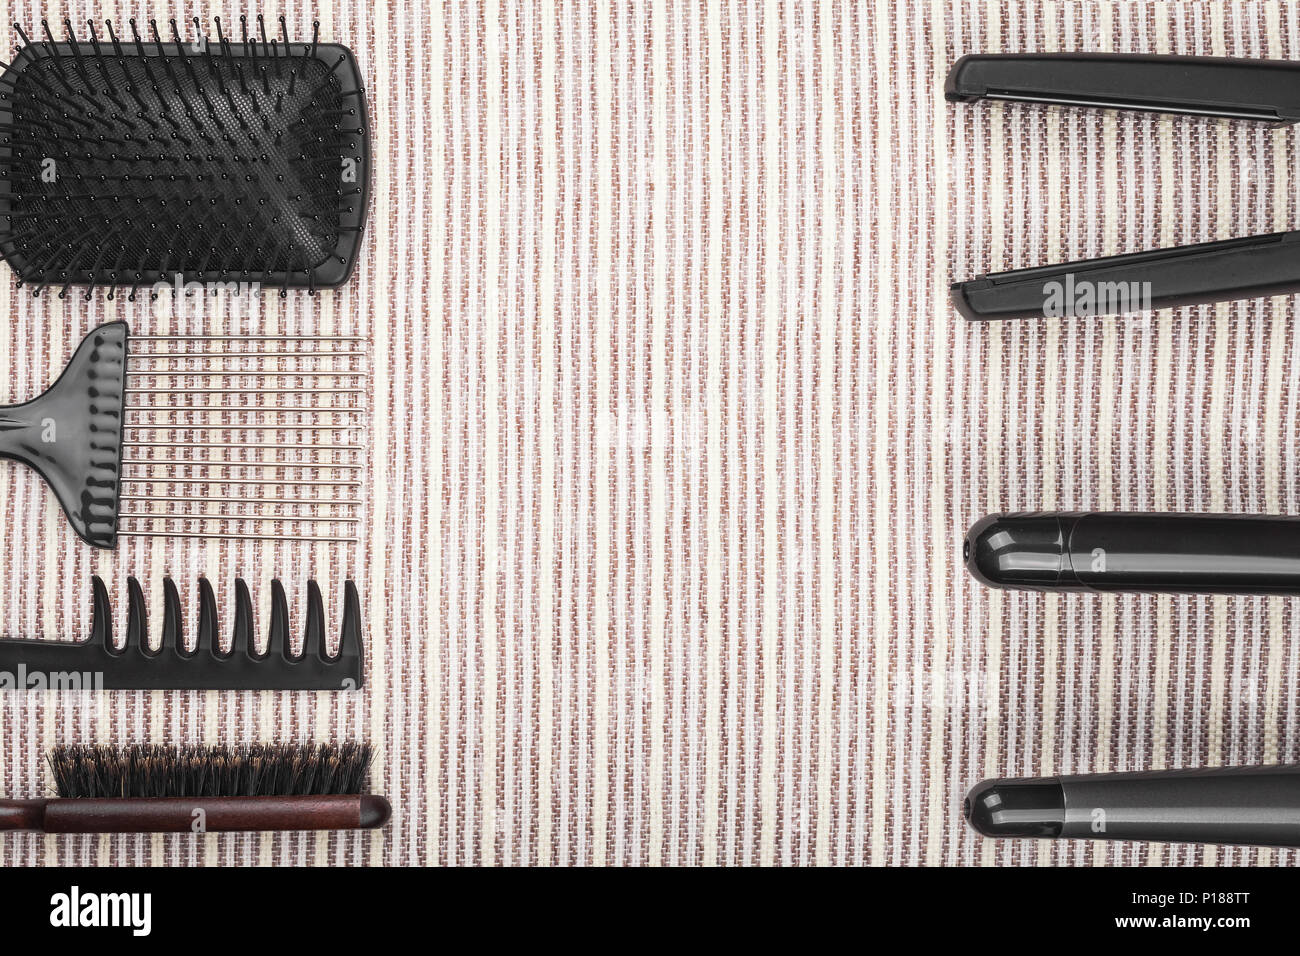 hair straightening tools lying opposite to brushes Stock Photo